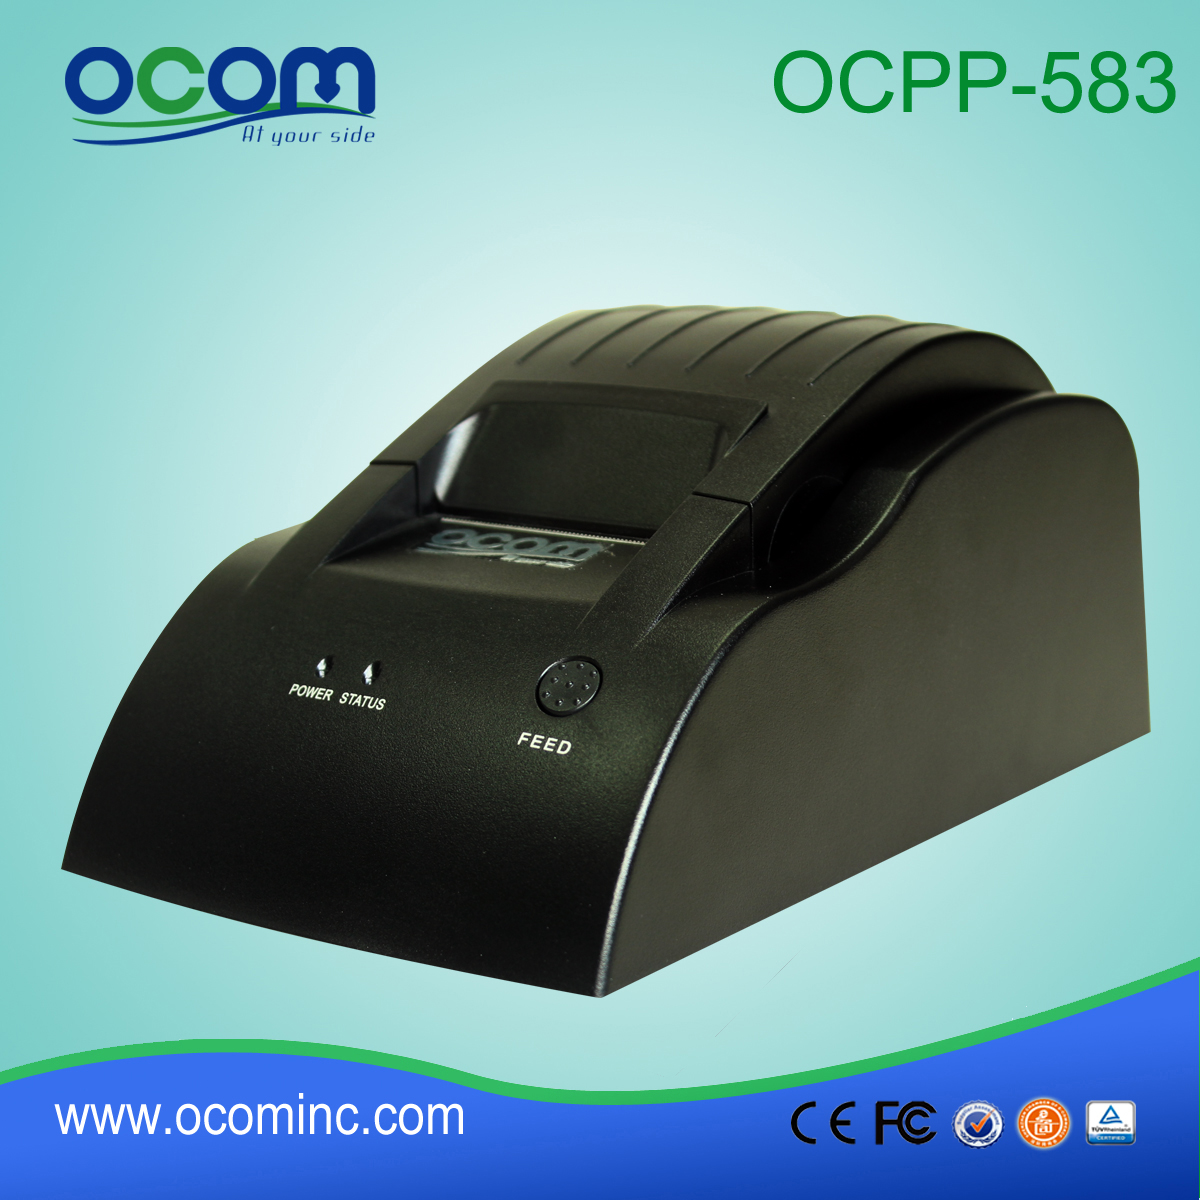 OCPP-583: 2015 αξιόπιστο και 58 χιλιοστά προσφοράς θερμικό εκτυπωτή παραλαβή, εκτυπωτή POS